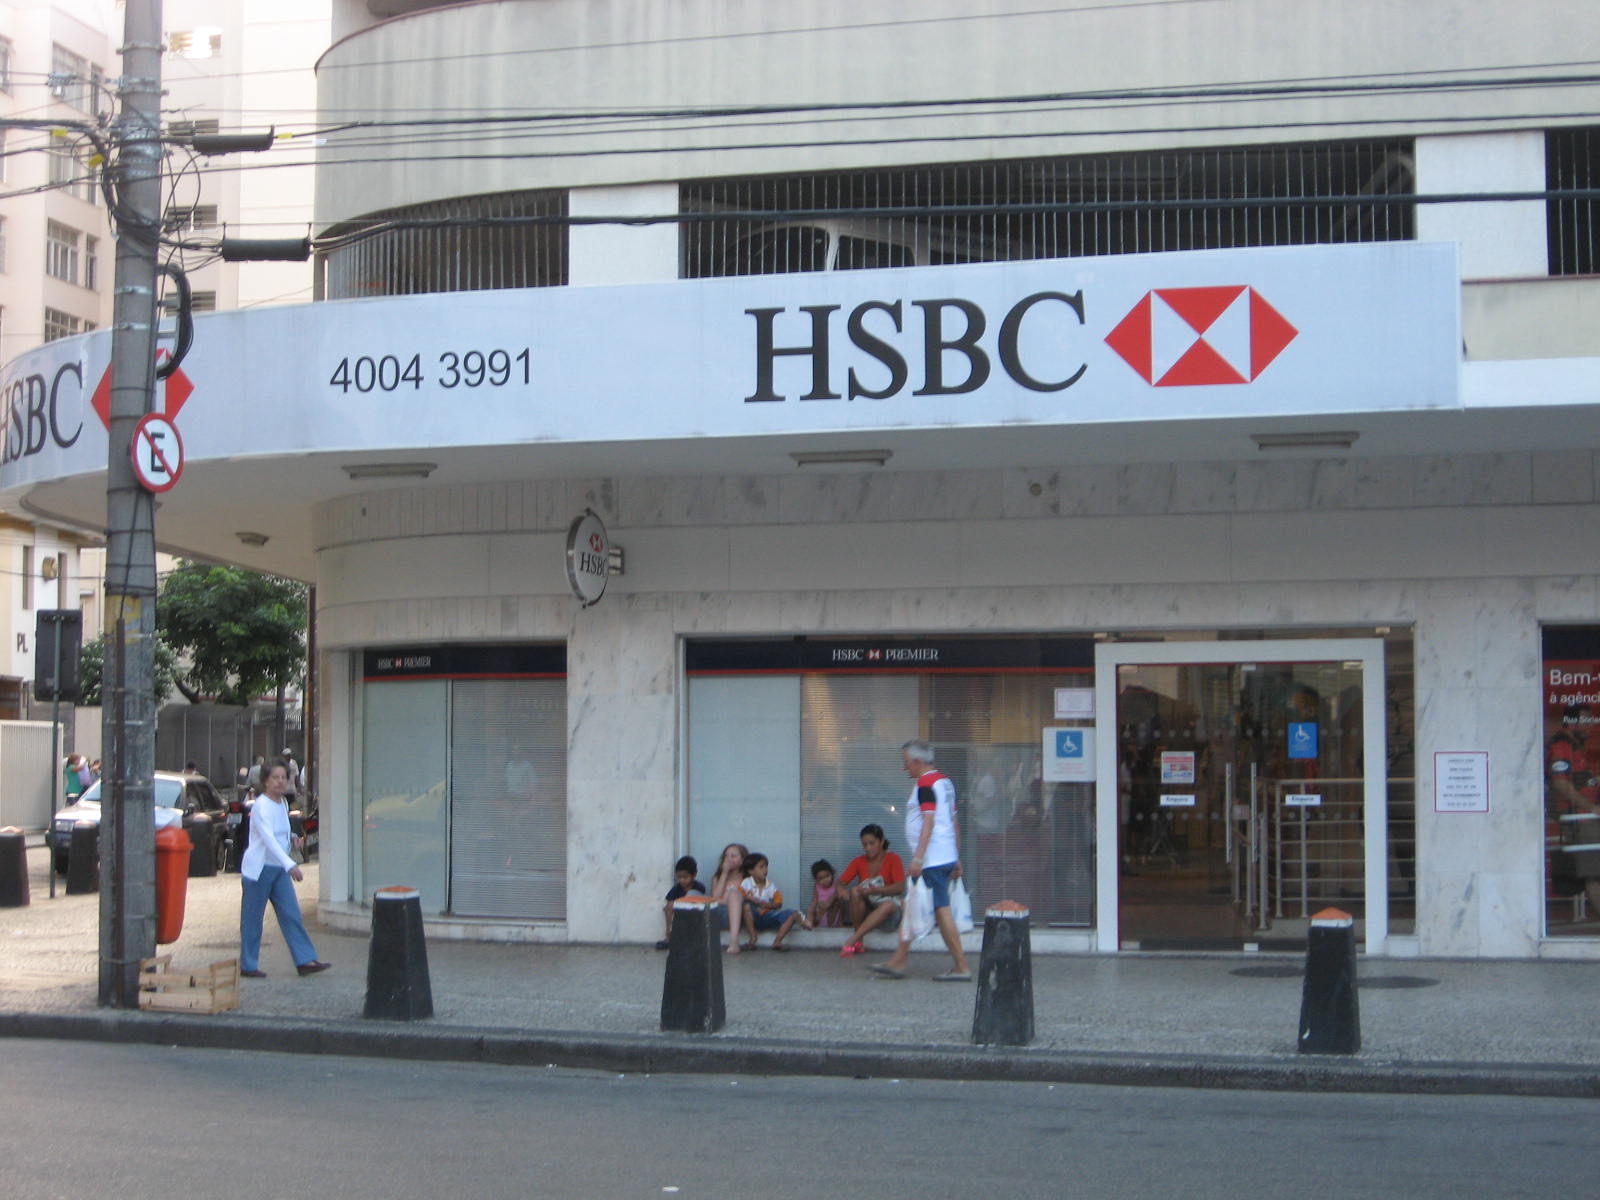 HSBC Branch in Tijuca, Rio de Janeiro, Brazil, Brazil News